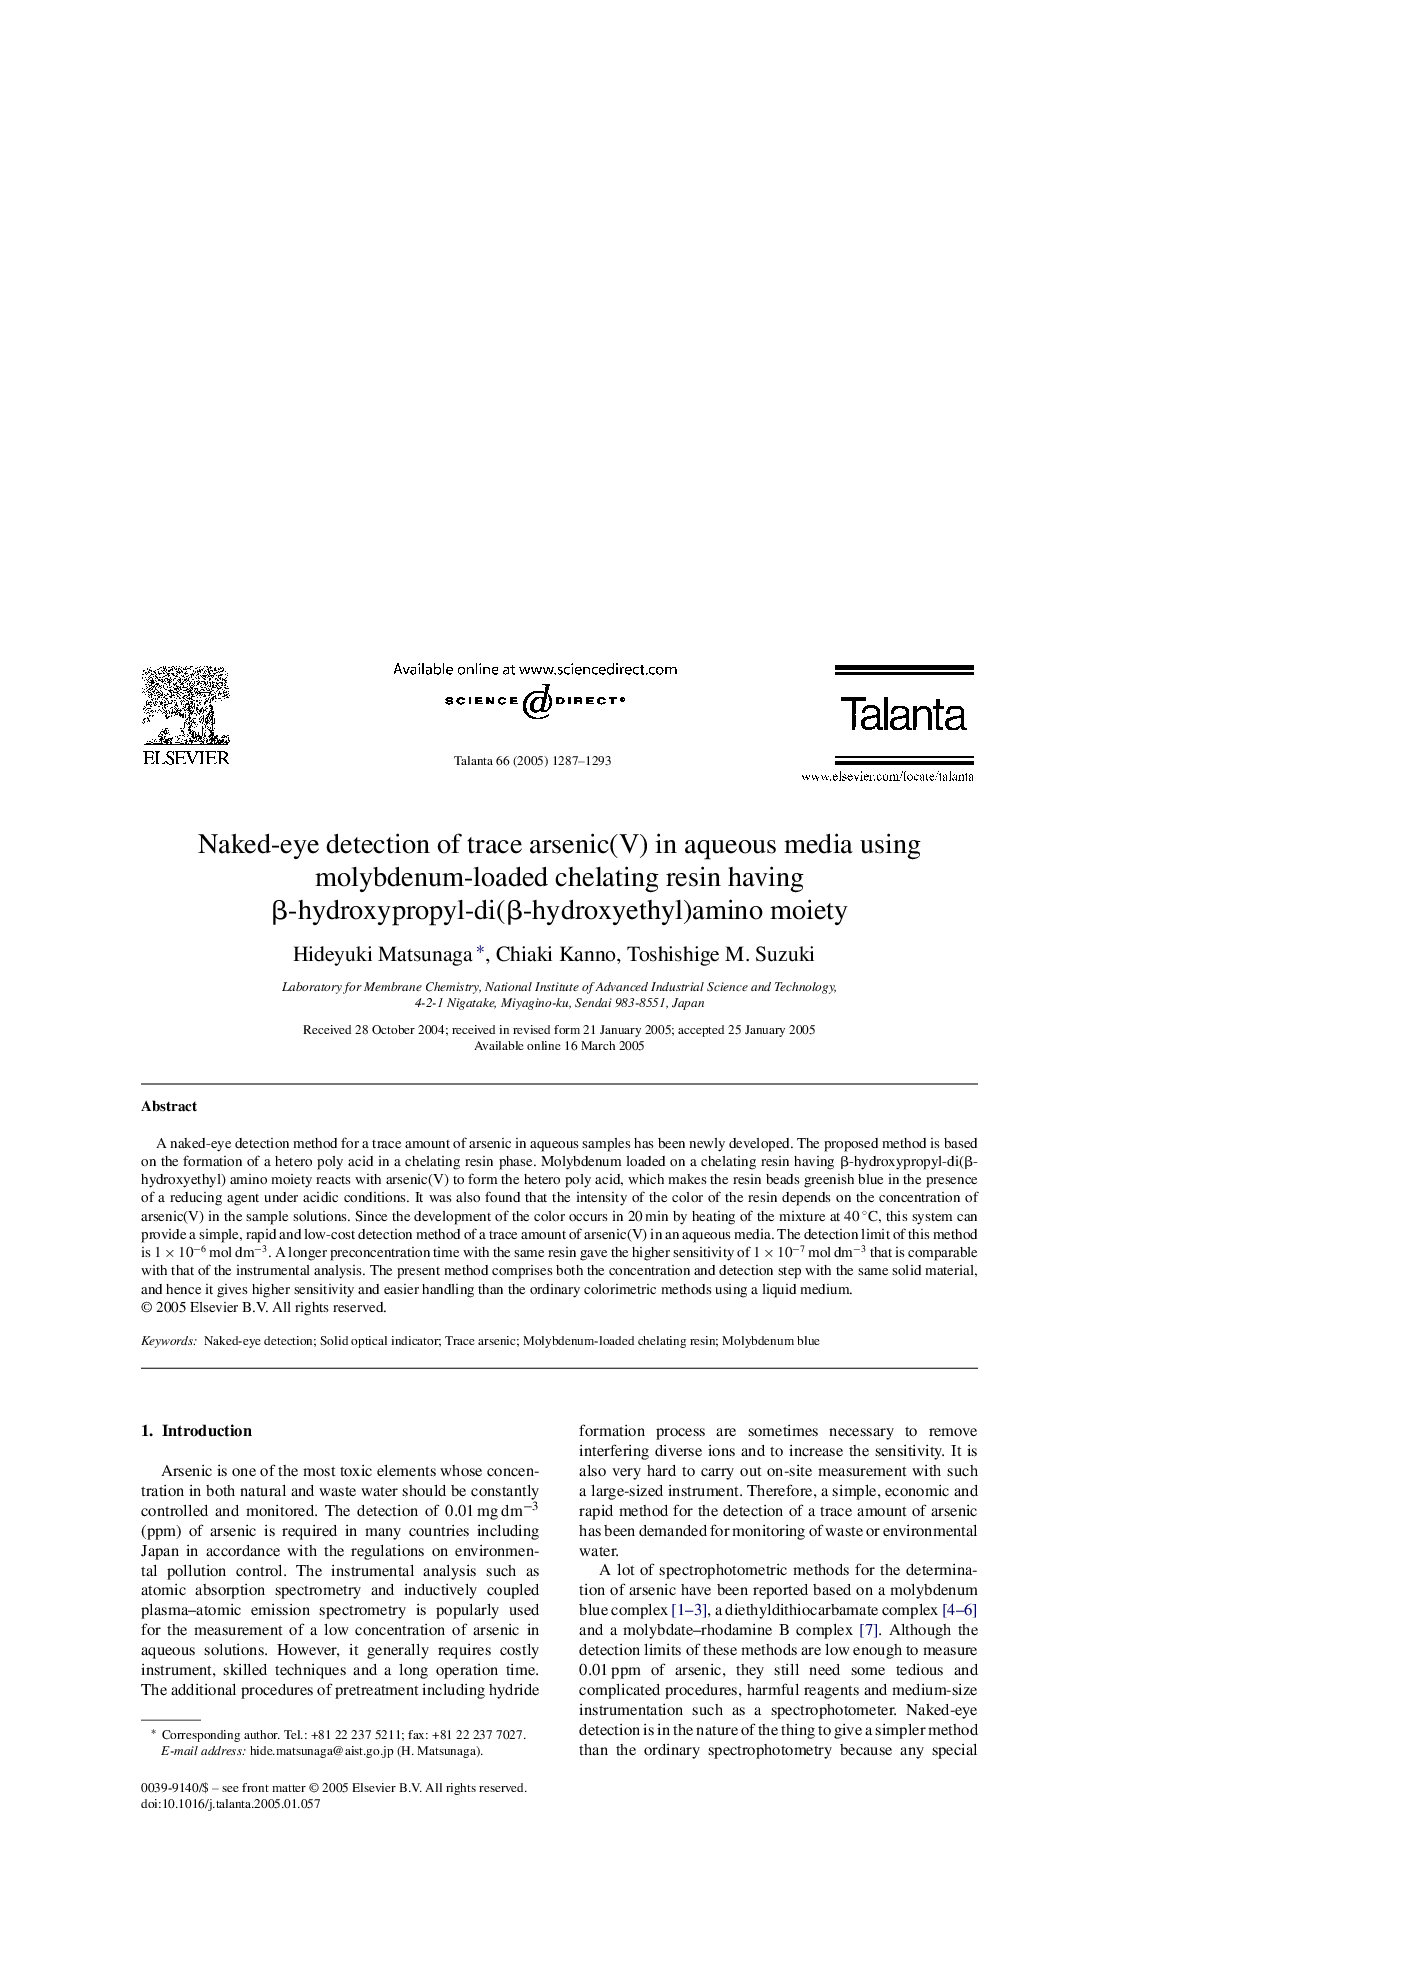 Naked-eye detection of trace arsenic(V) in aqueous media using molybdenum-loaded chelating resin having Î²-hydroxypropyl-di(Î²-hydroxyethyl)amino moiety